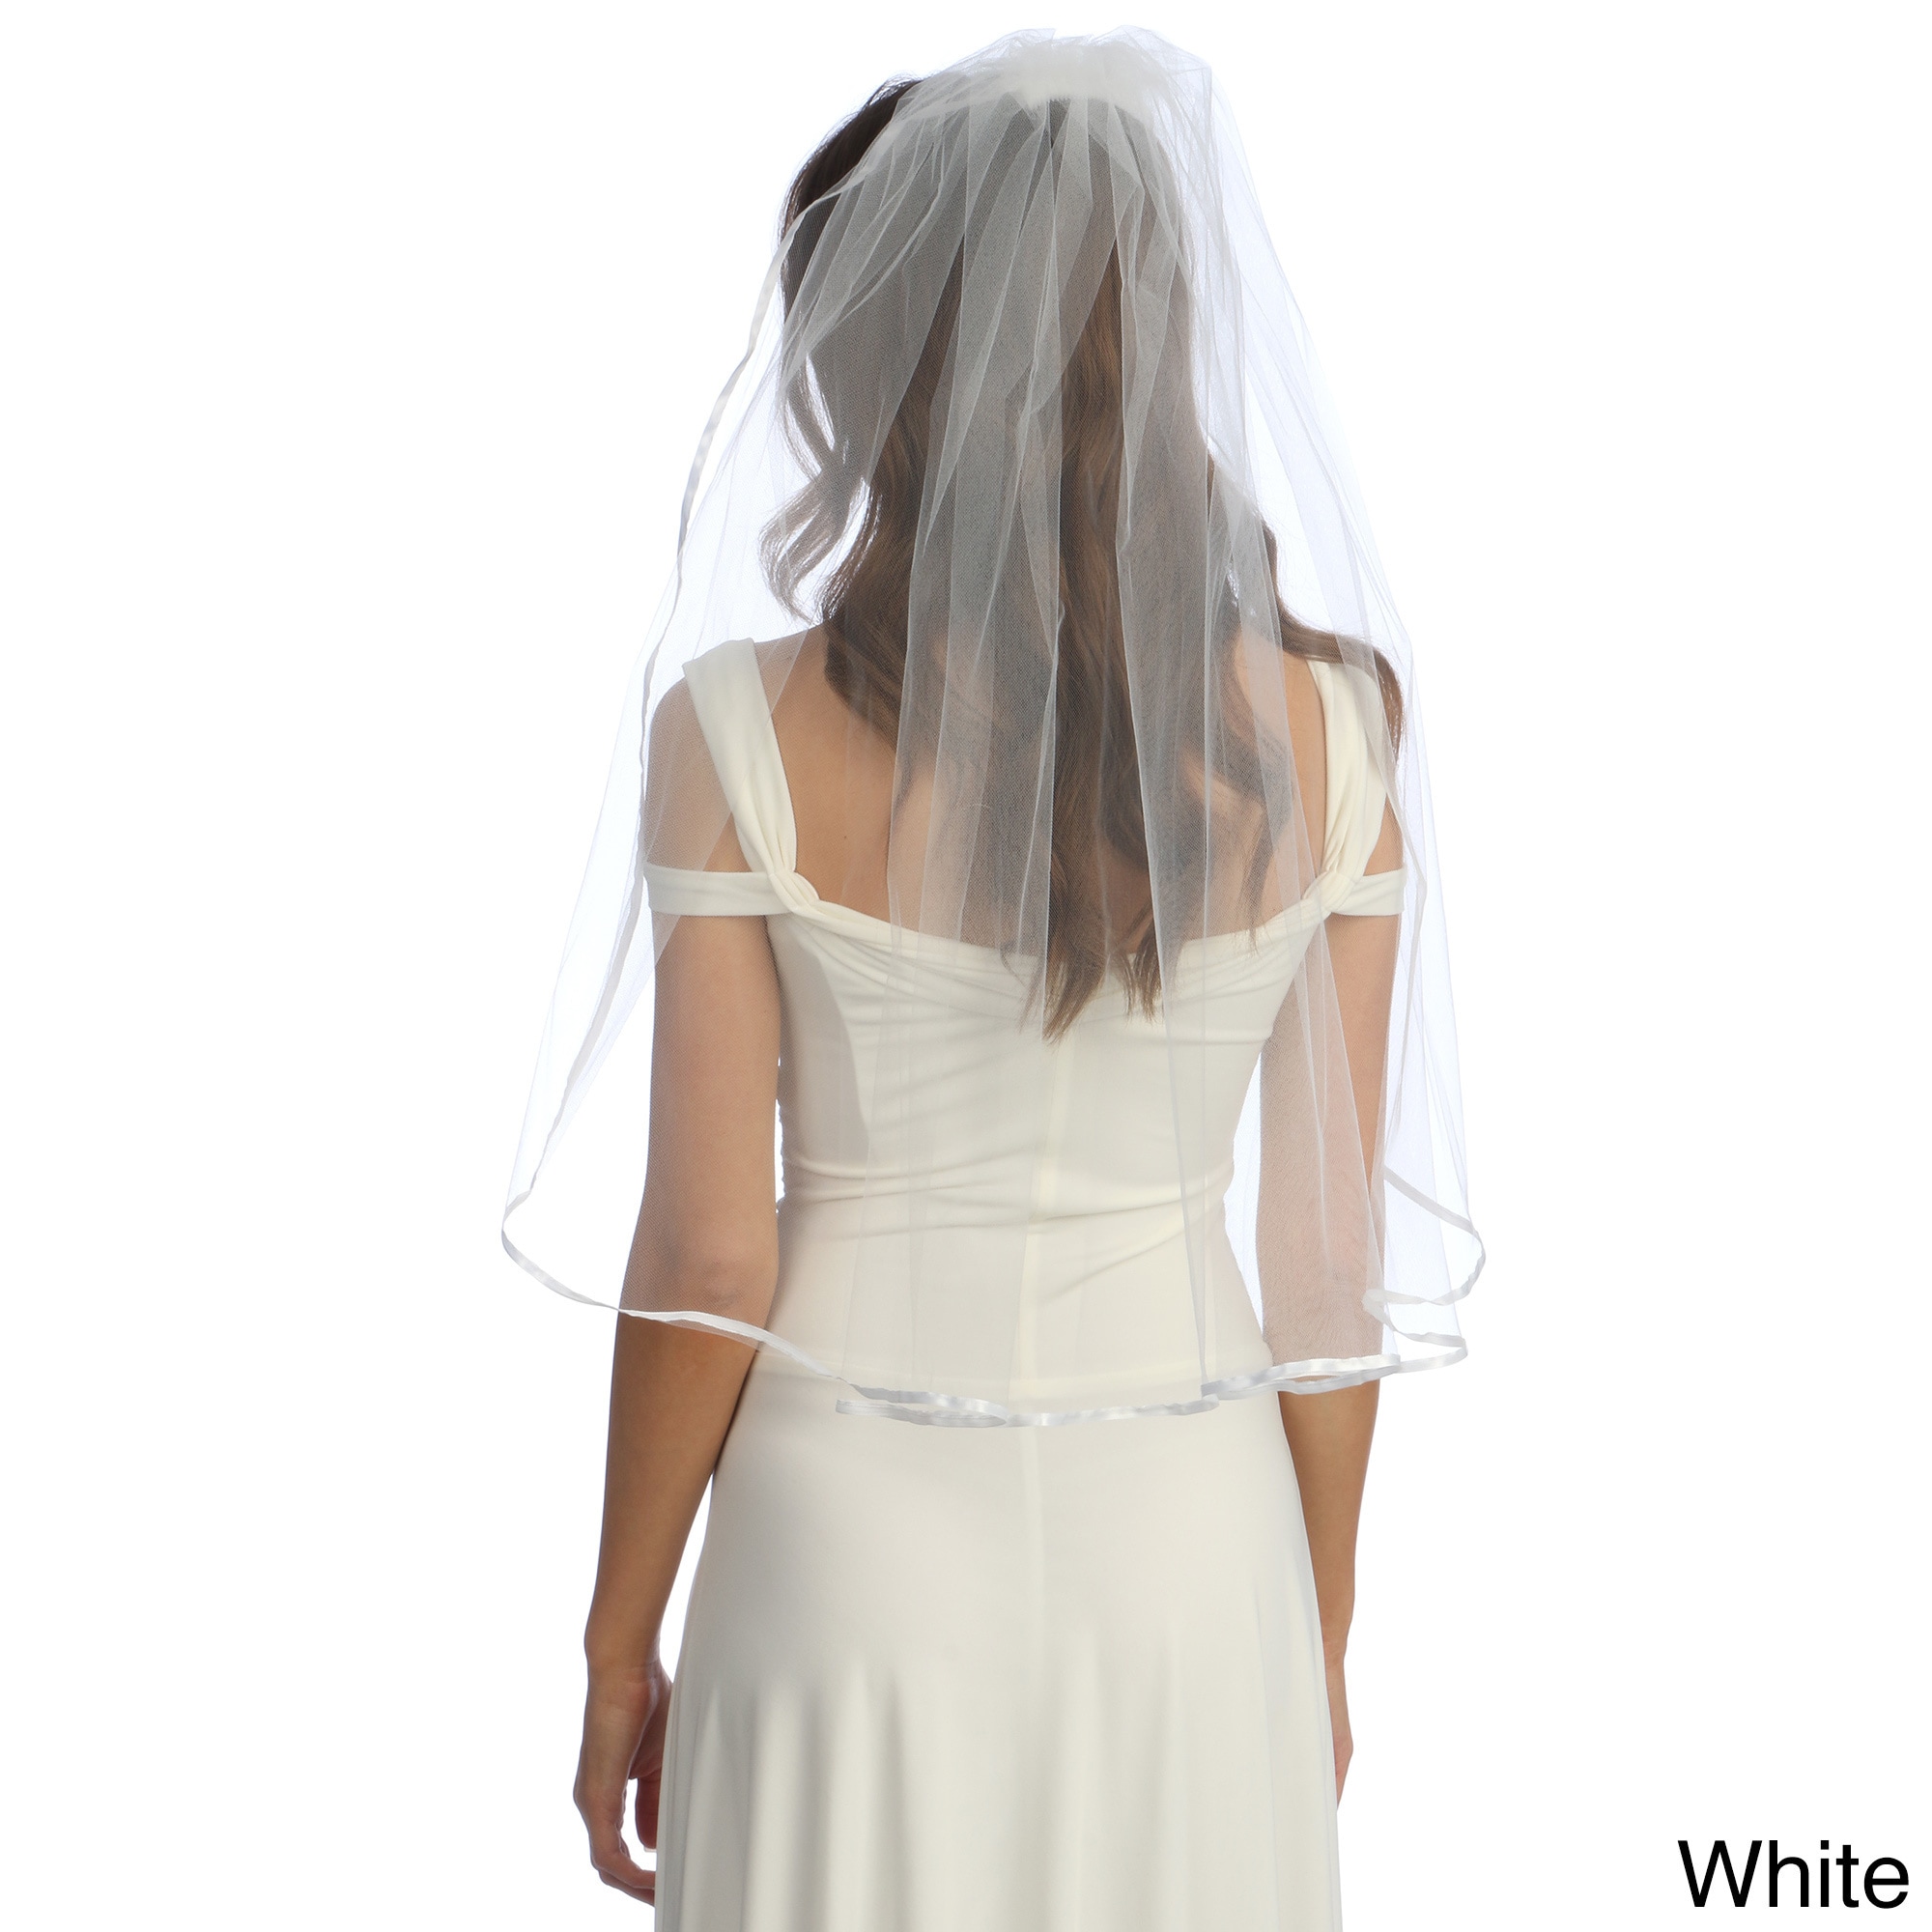 Bridal Veil Company Inc. Amour Bridal Single Tier Waist length Satin Veil White Size One Size Fits Most